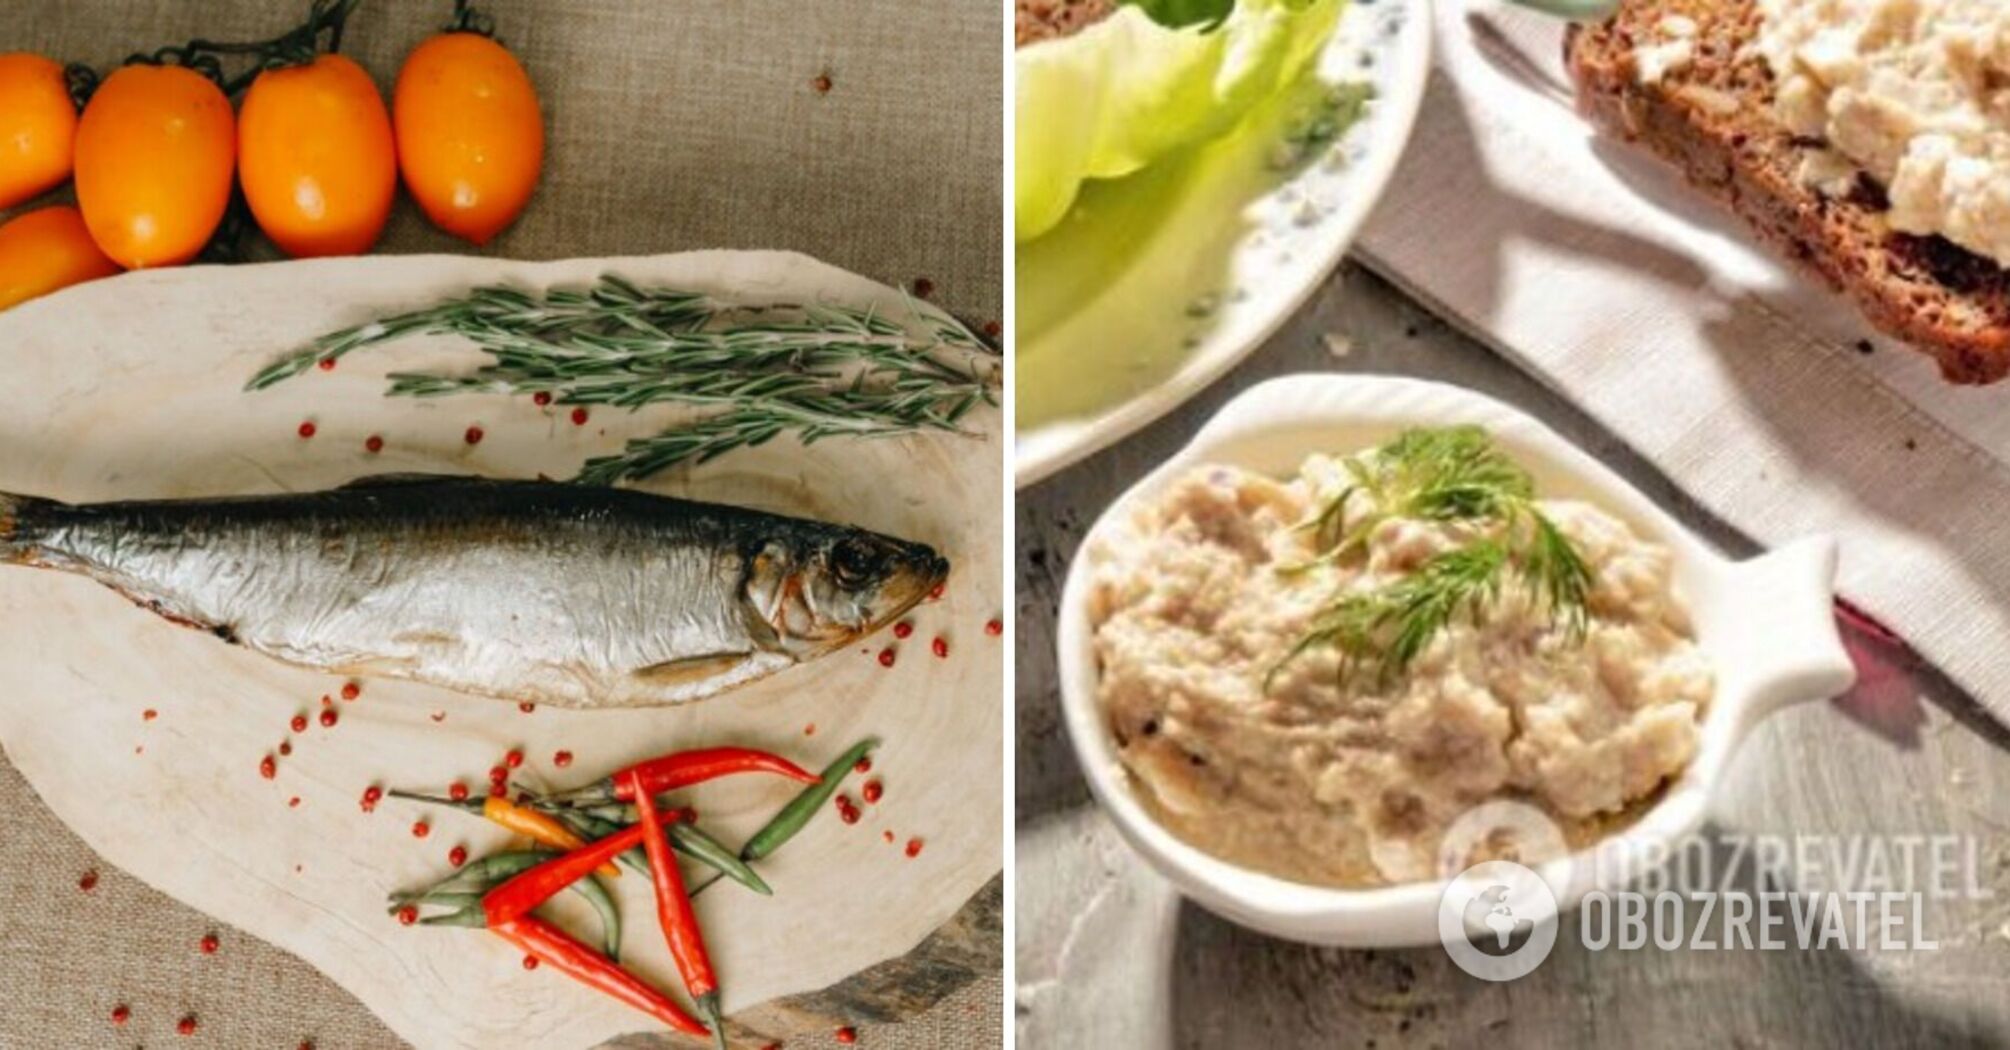 Recipe for herring spread on bread